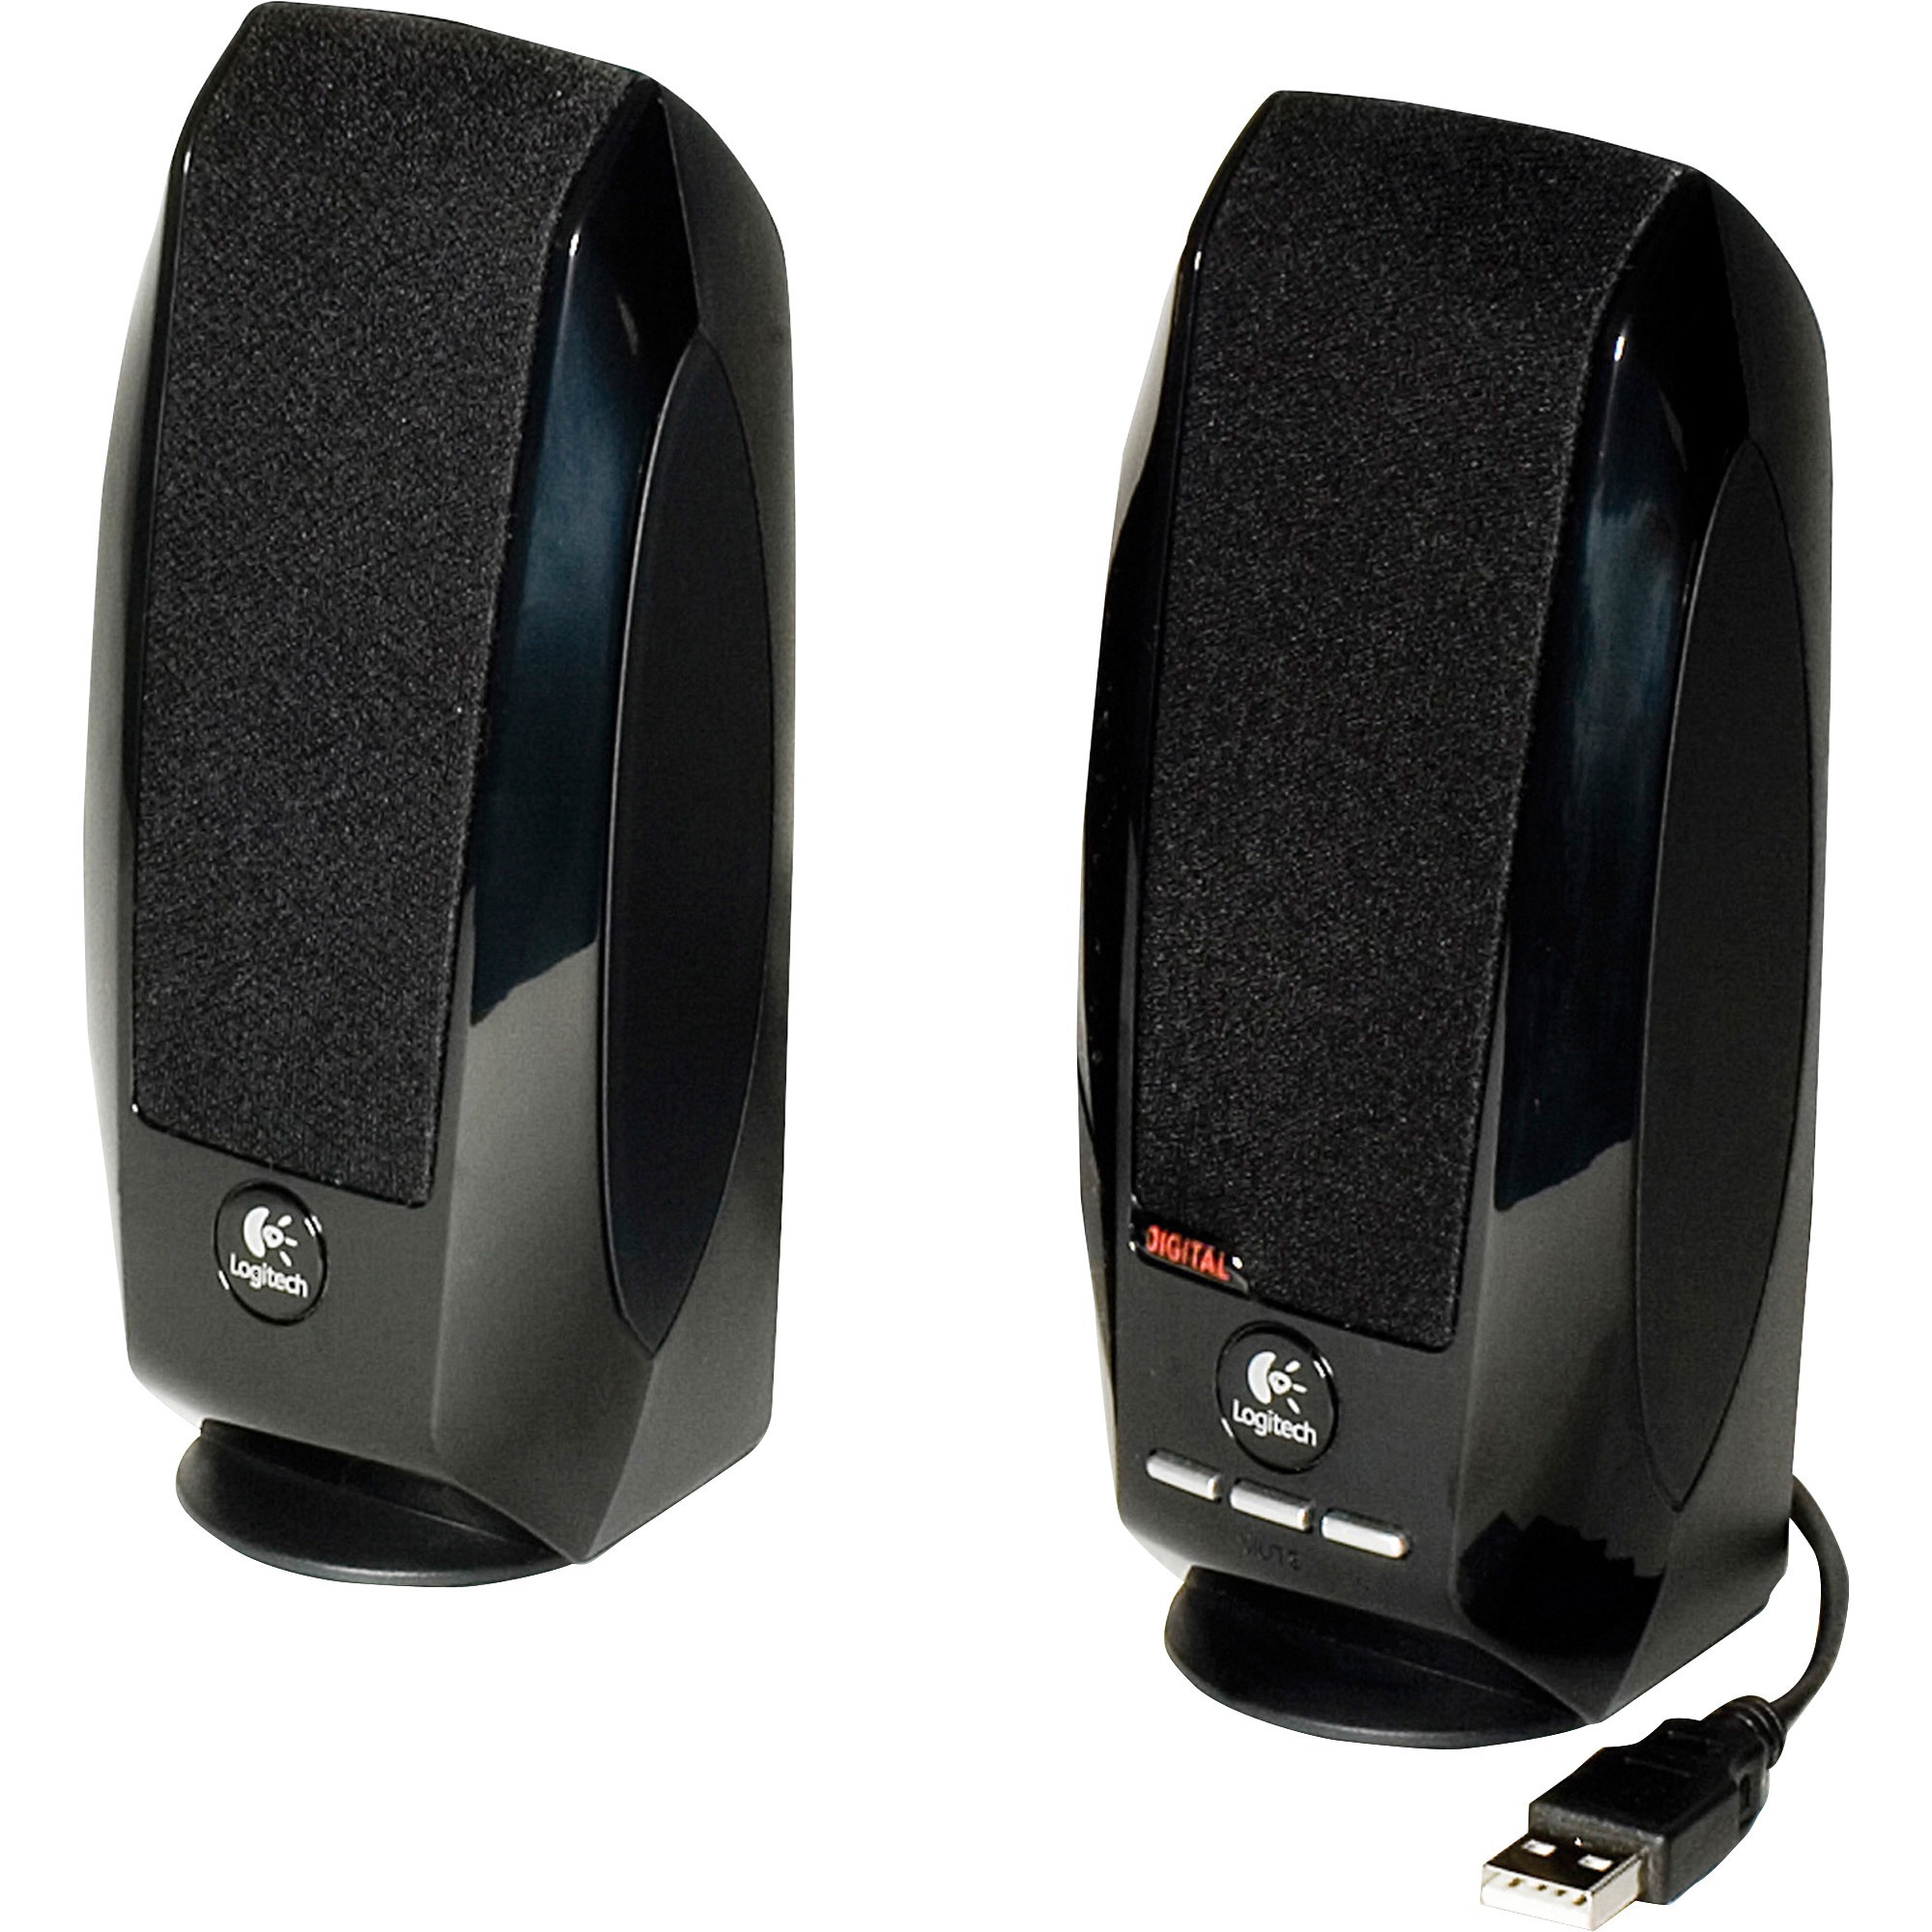 Logitech S-150 2.0 Speaker System - 1.2 W RMS - Black - Each